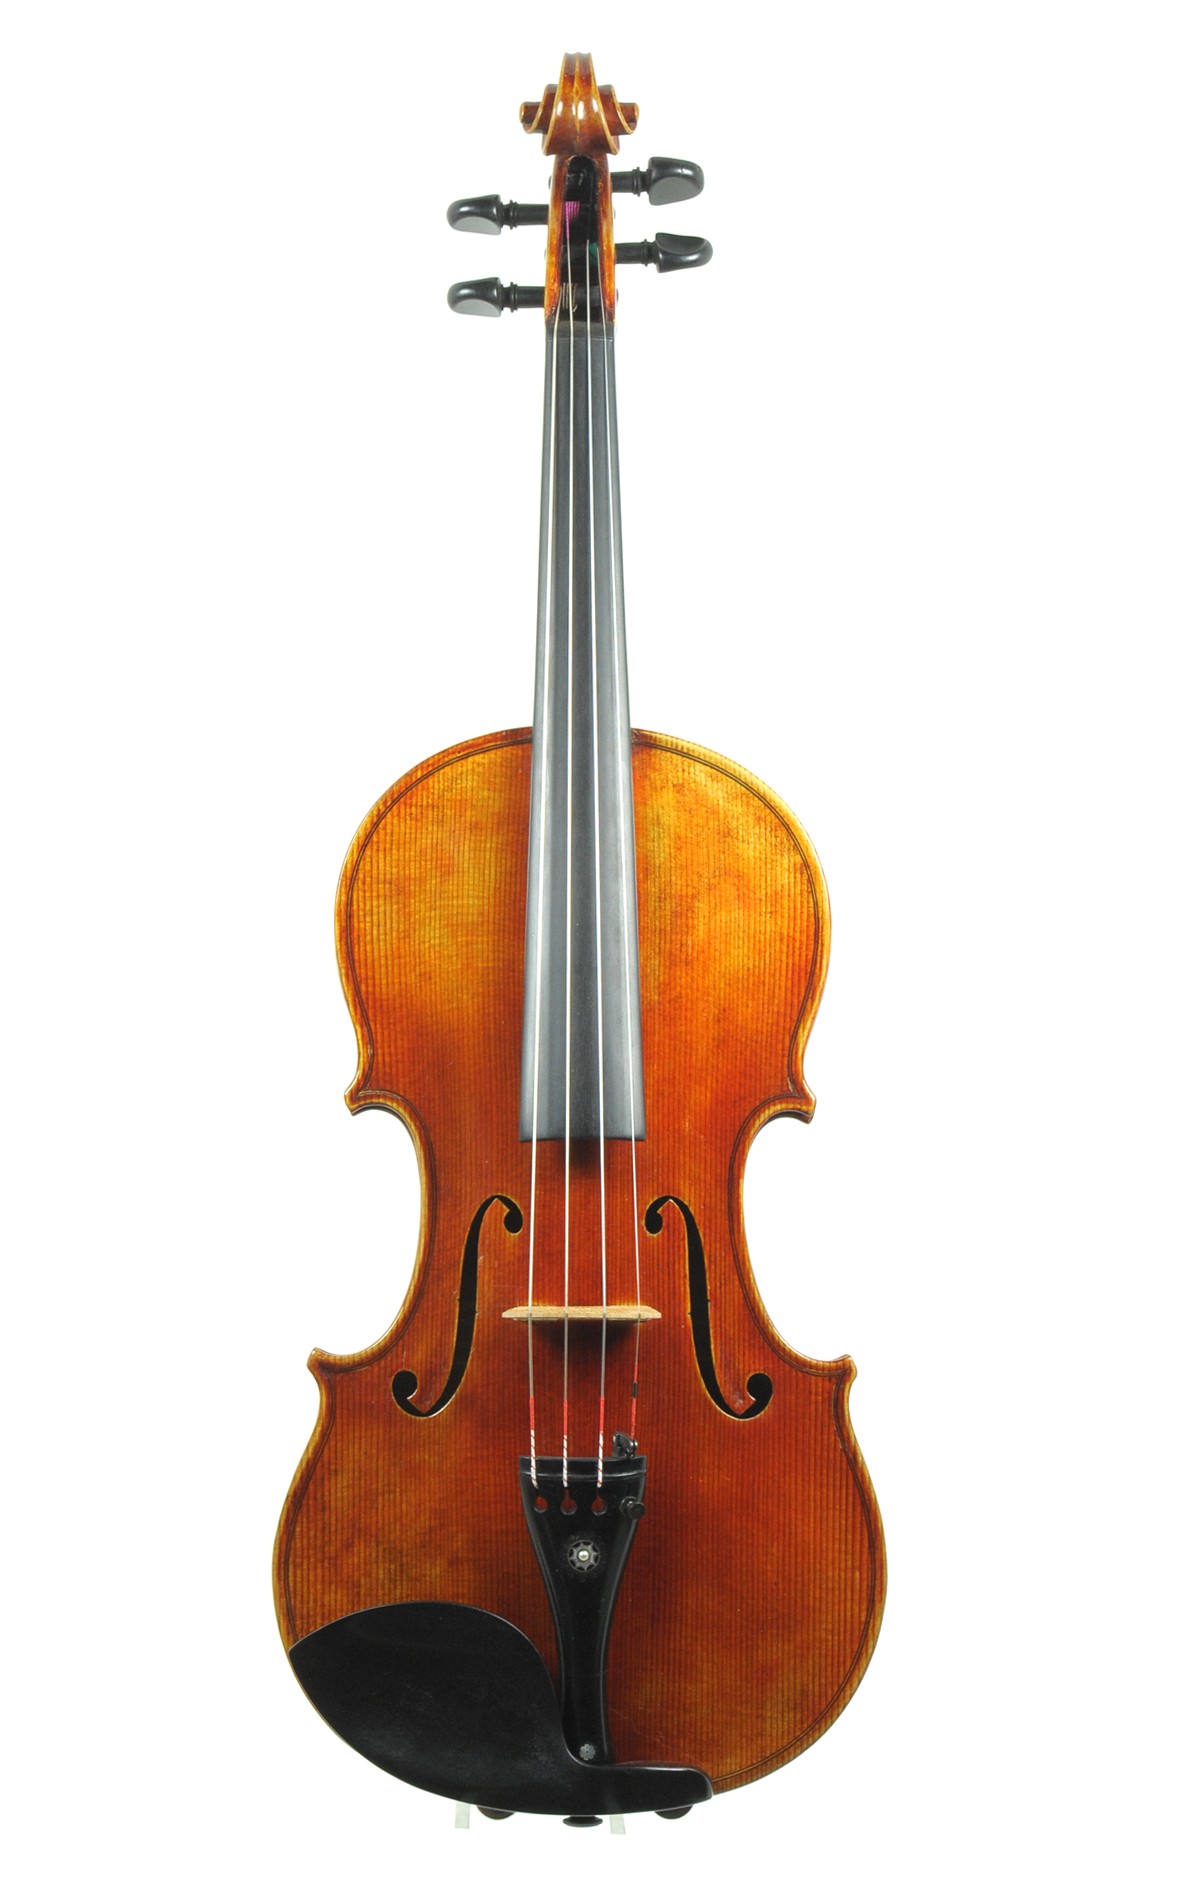 Violin from Machold’s custom violin workshop, Chemnitz